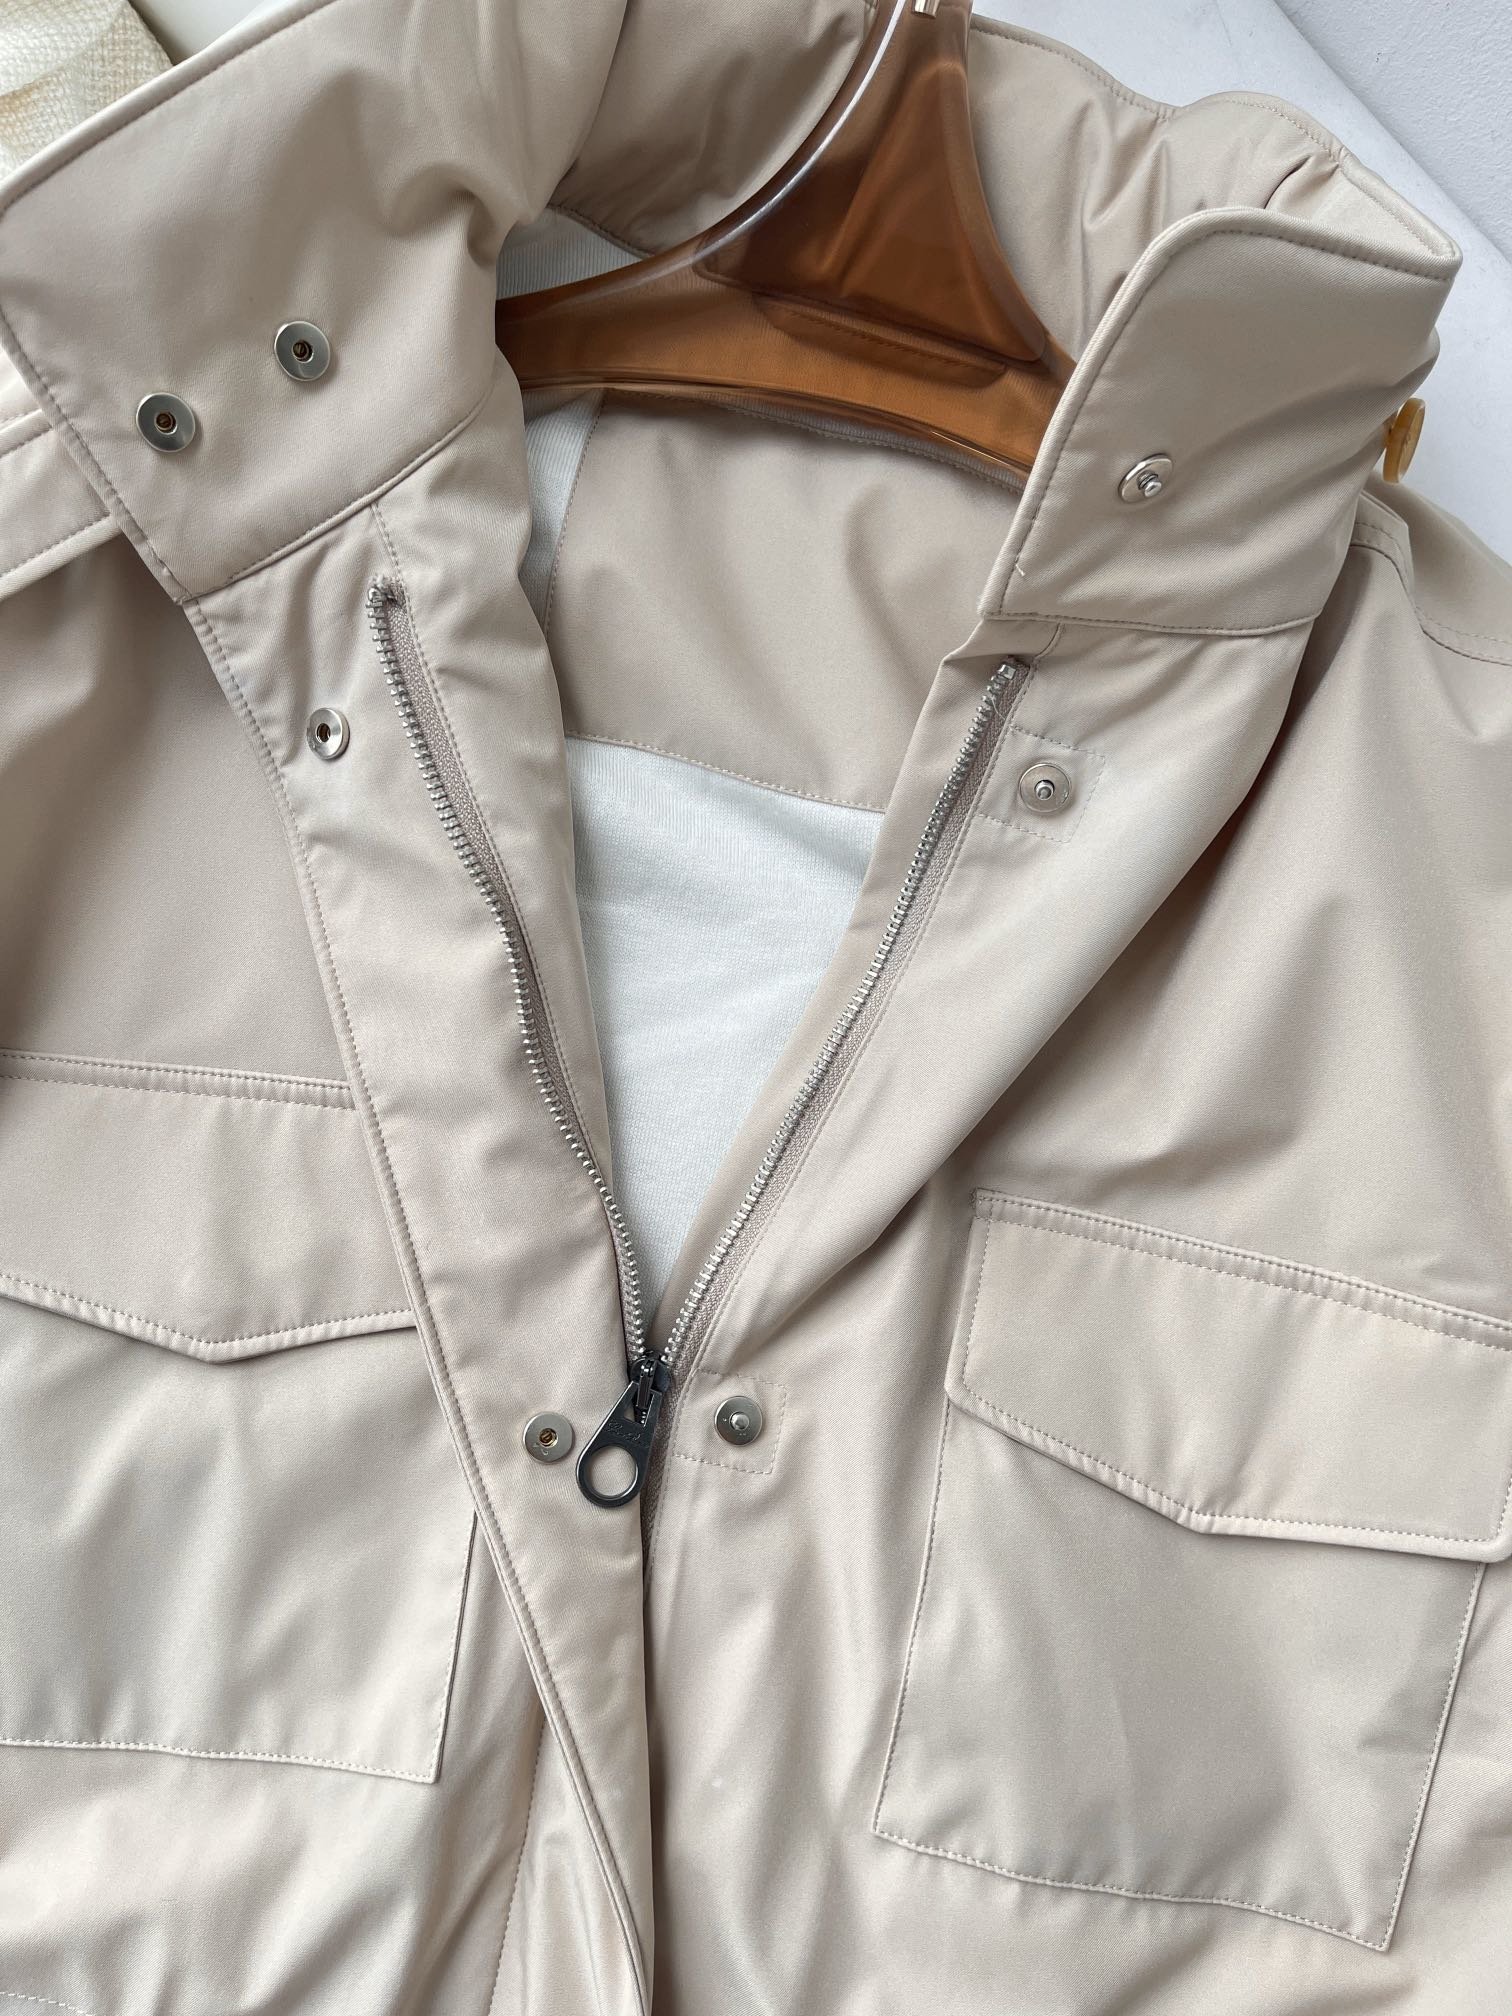 lp133秋冬新款羊绒旅行者夹克外套如果对LP的产品线熟知对它的面料工艺穿着感定位那么这个系列必会非常喜